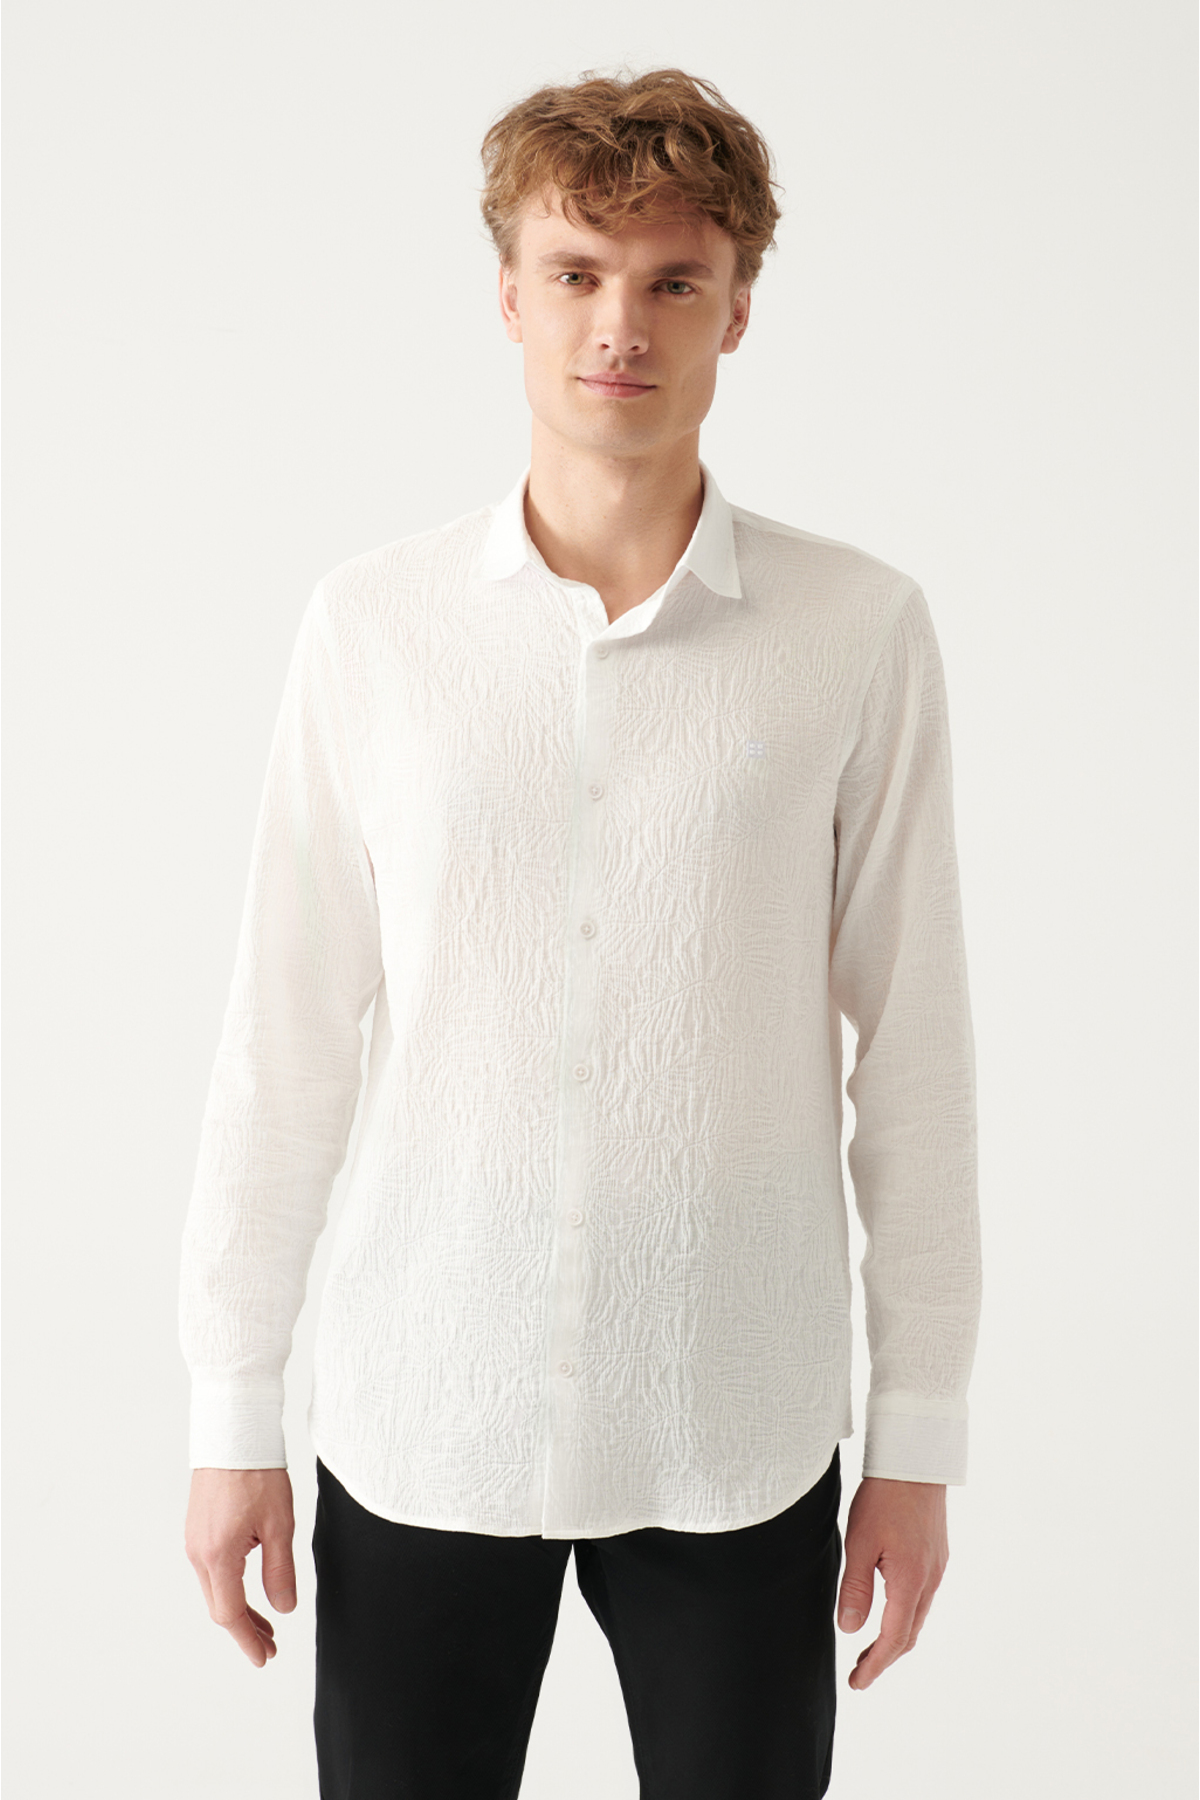 Avva Men's White See-through Cotton Classic Collar Slim Fit Slim Fit Shirt